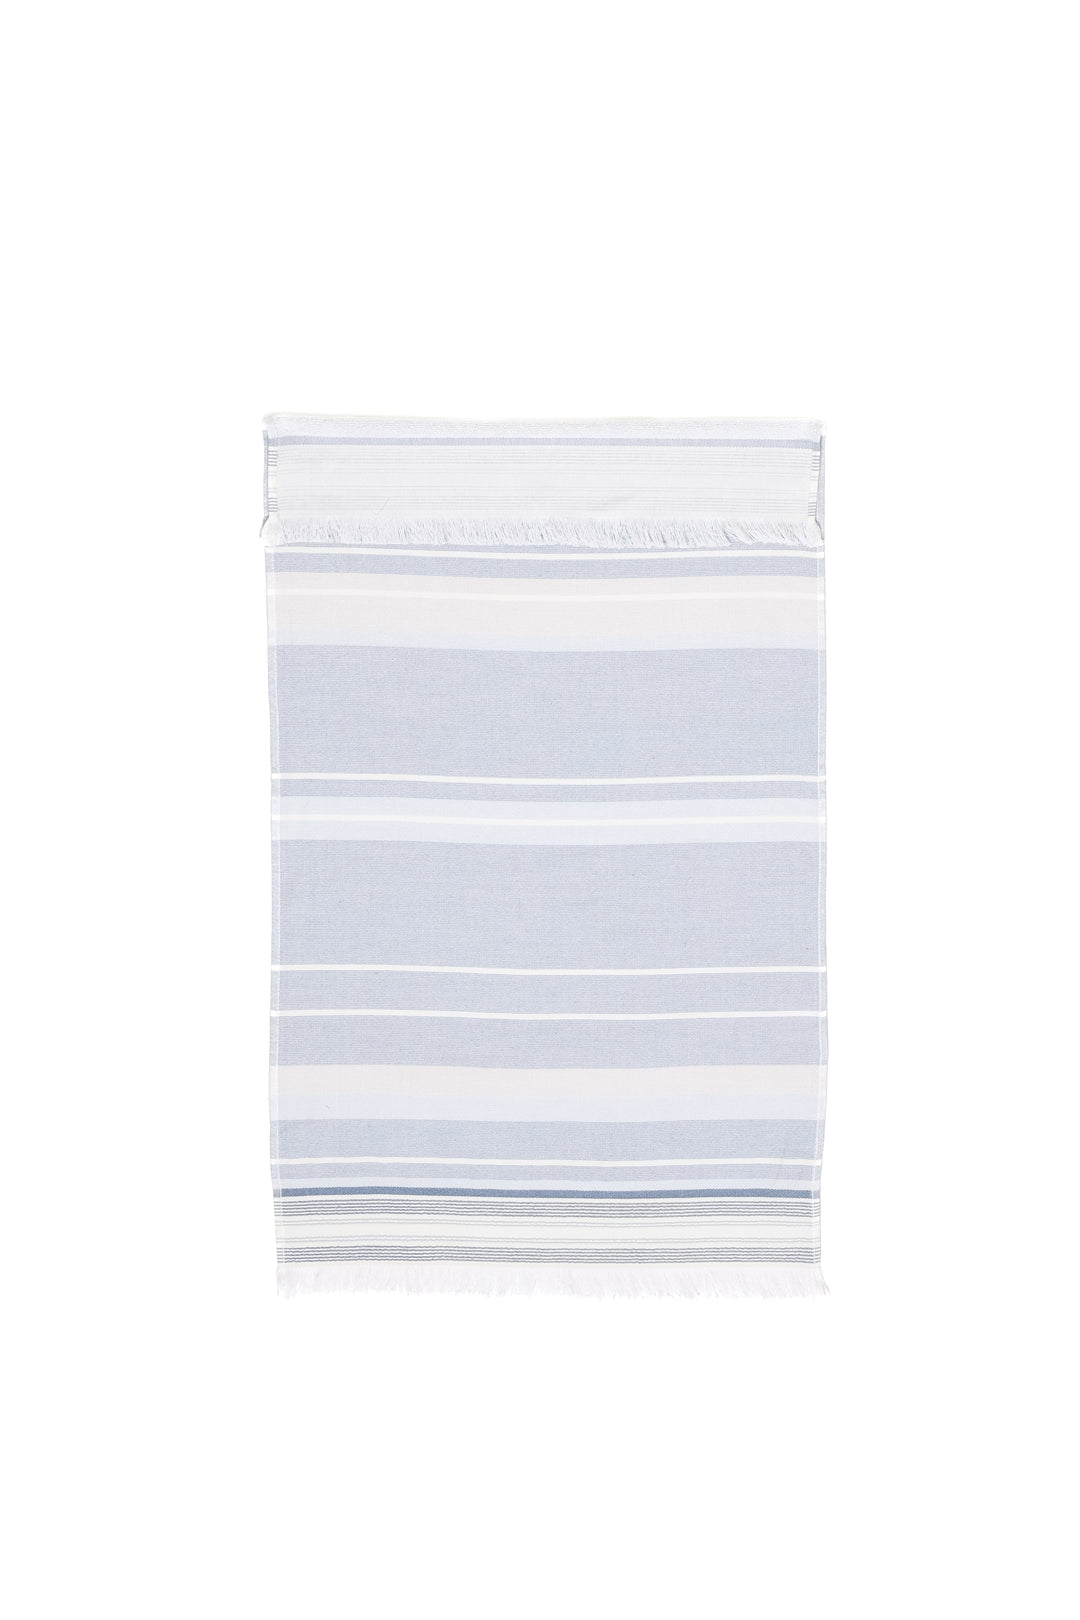 The Lyrik Hand Towel Series